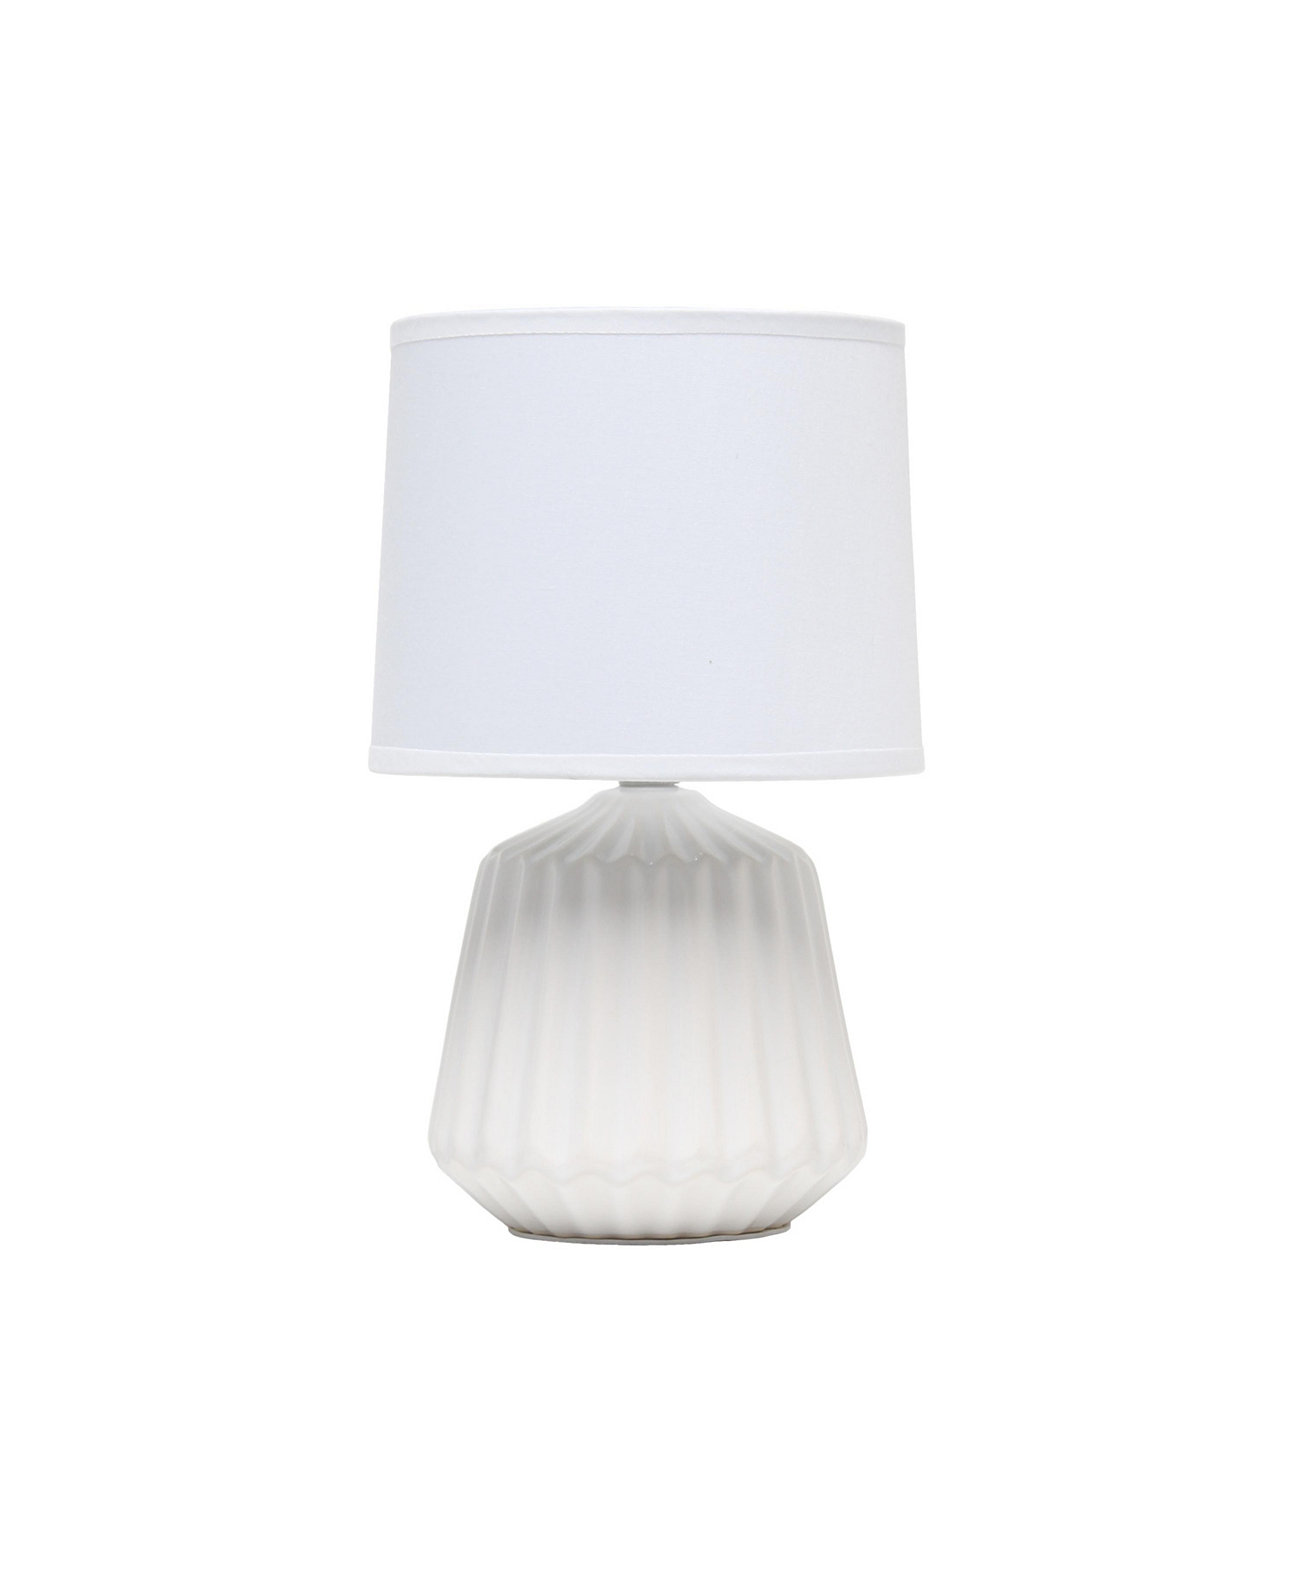 Миниатюрная настольная лампа со складками Simple Designs